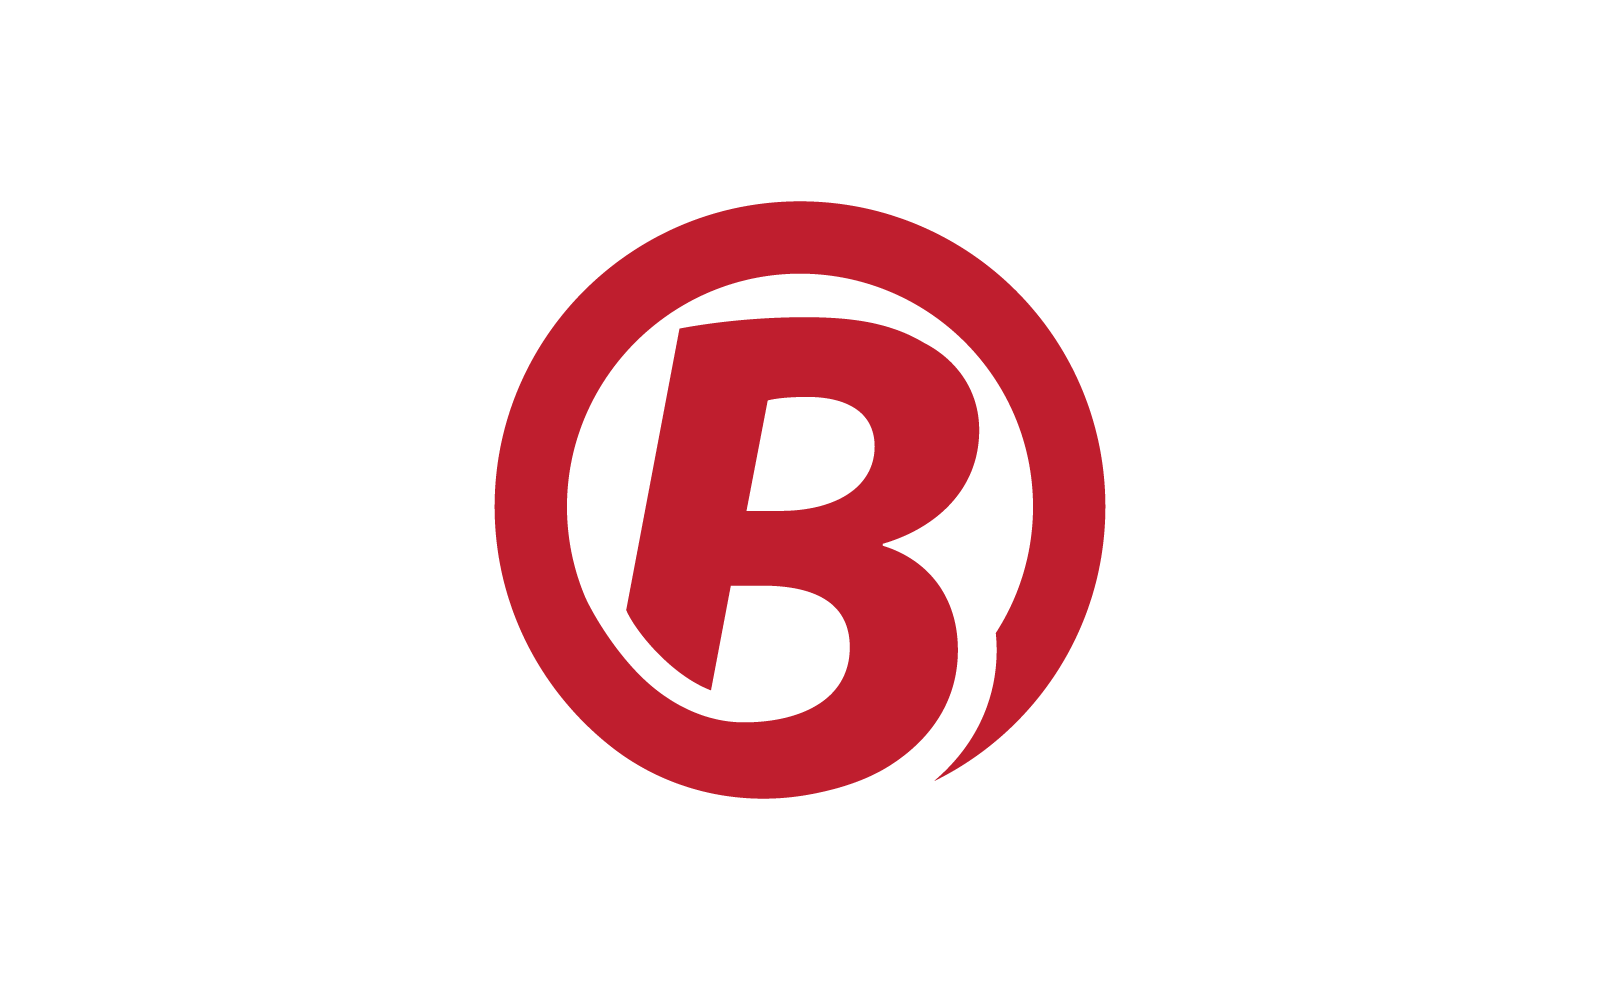 Modern B Initial letter alphabet font logo vector design Logo Template